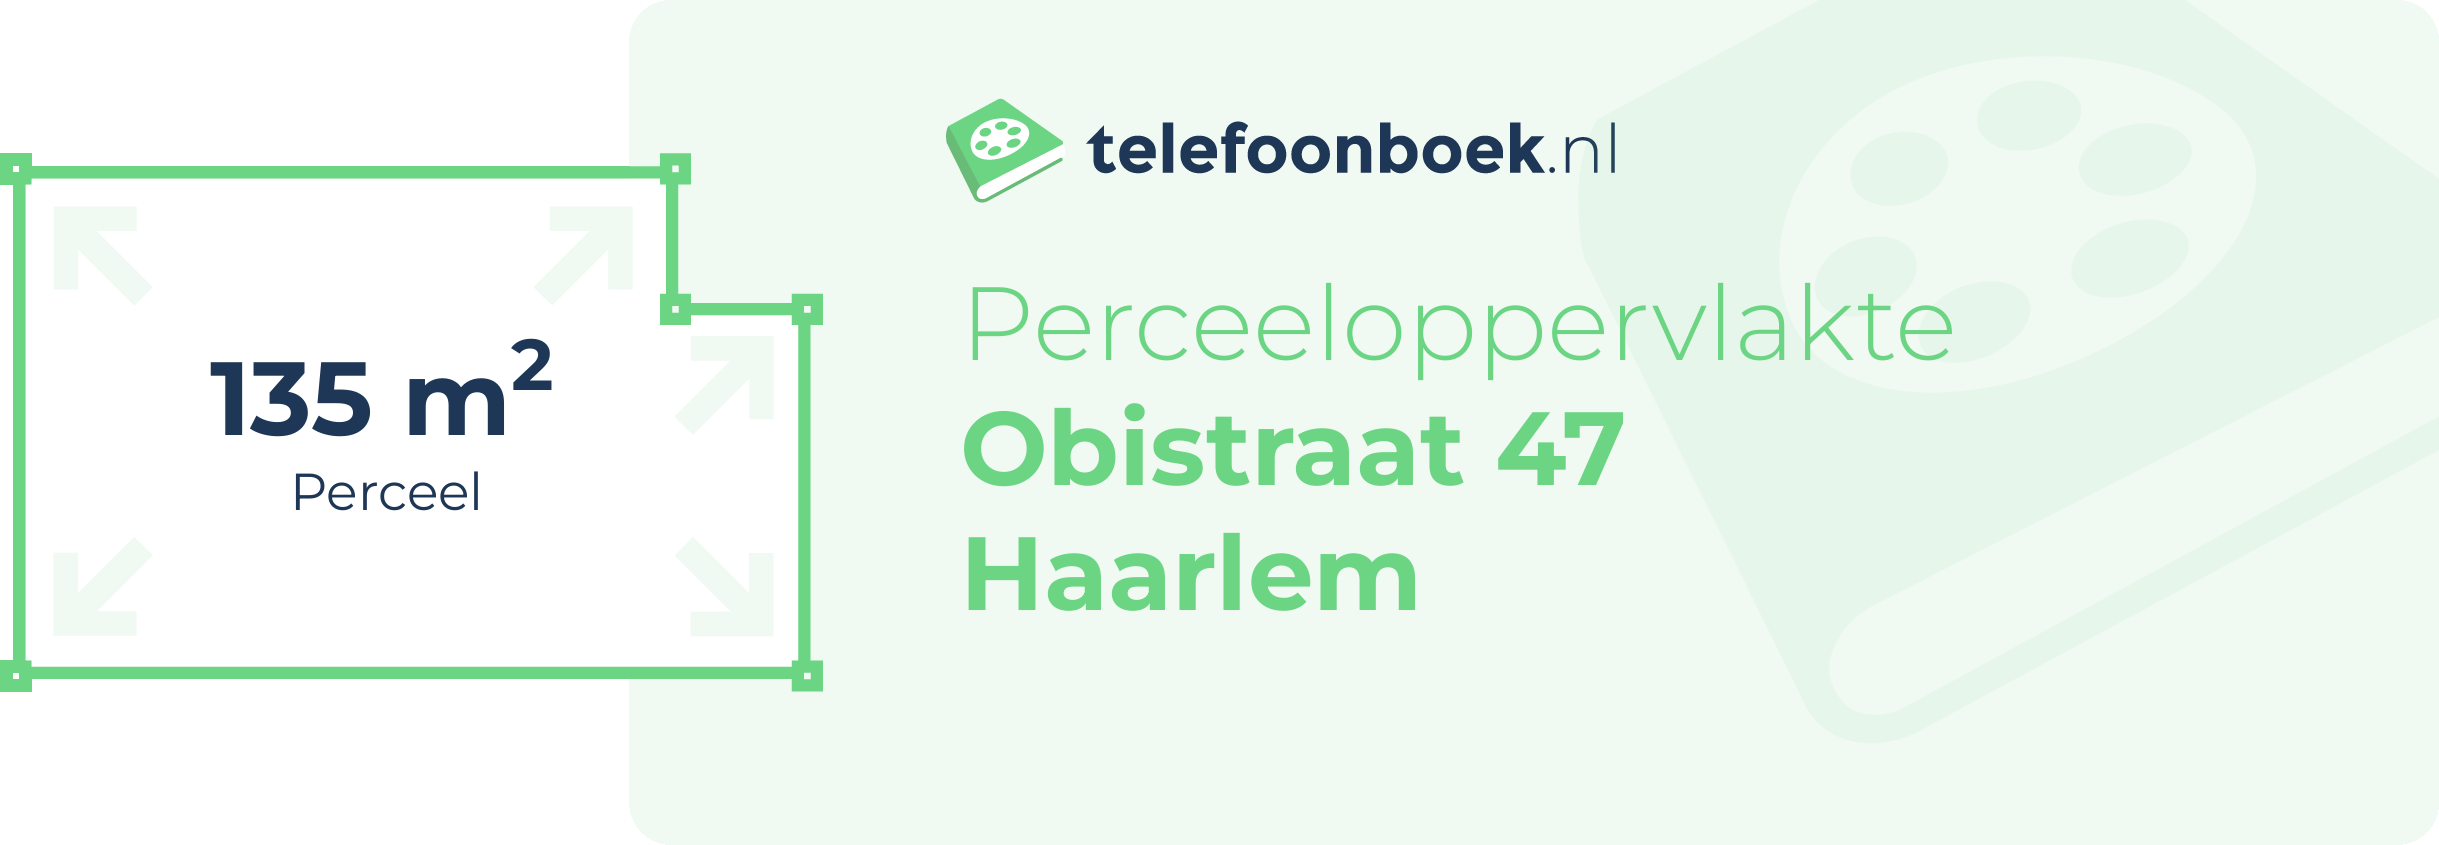 Perceeloppervlakte Obistraat 47 Haarlem